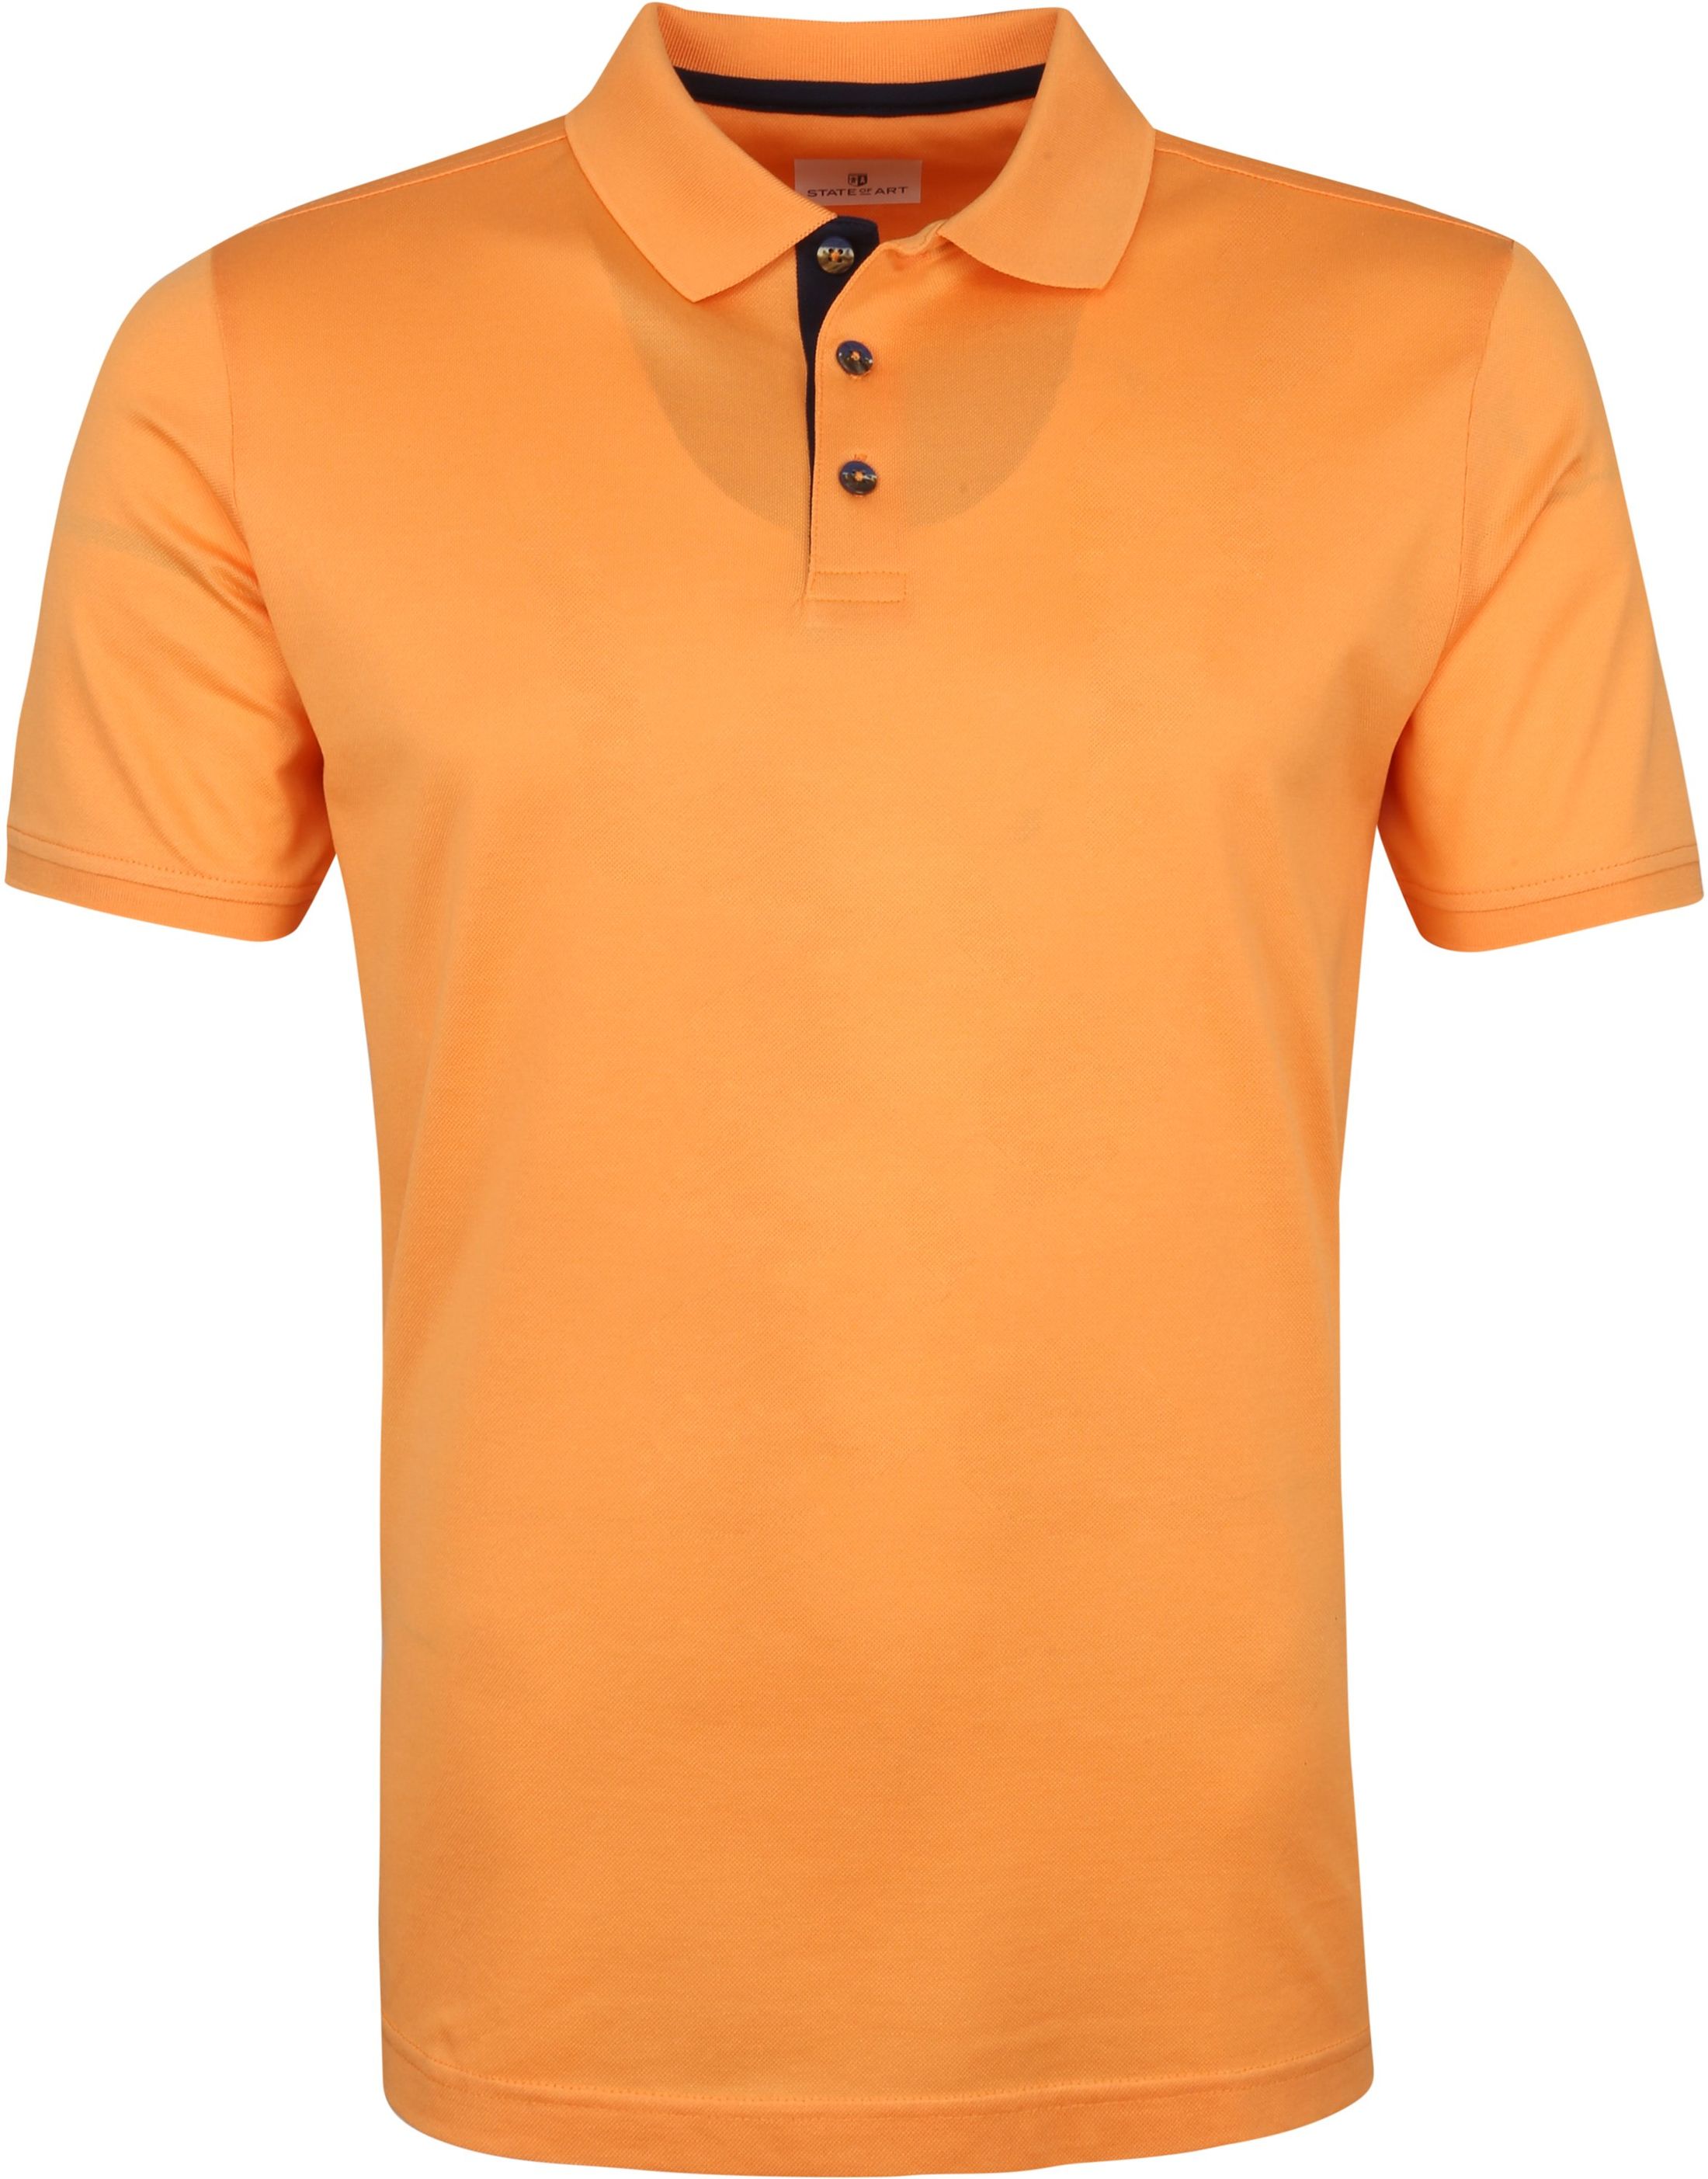 State Of Art Mercerized Pique Polo Shirt Orange size 3XL